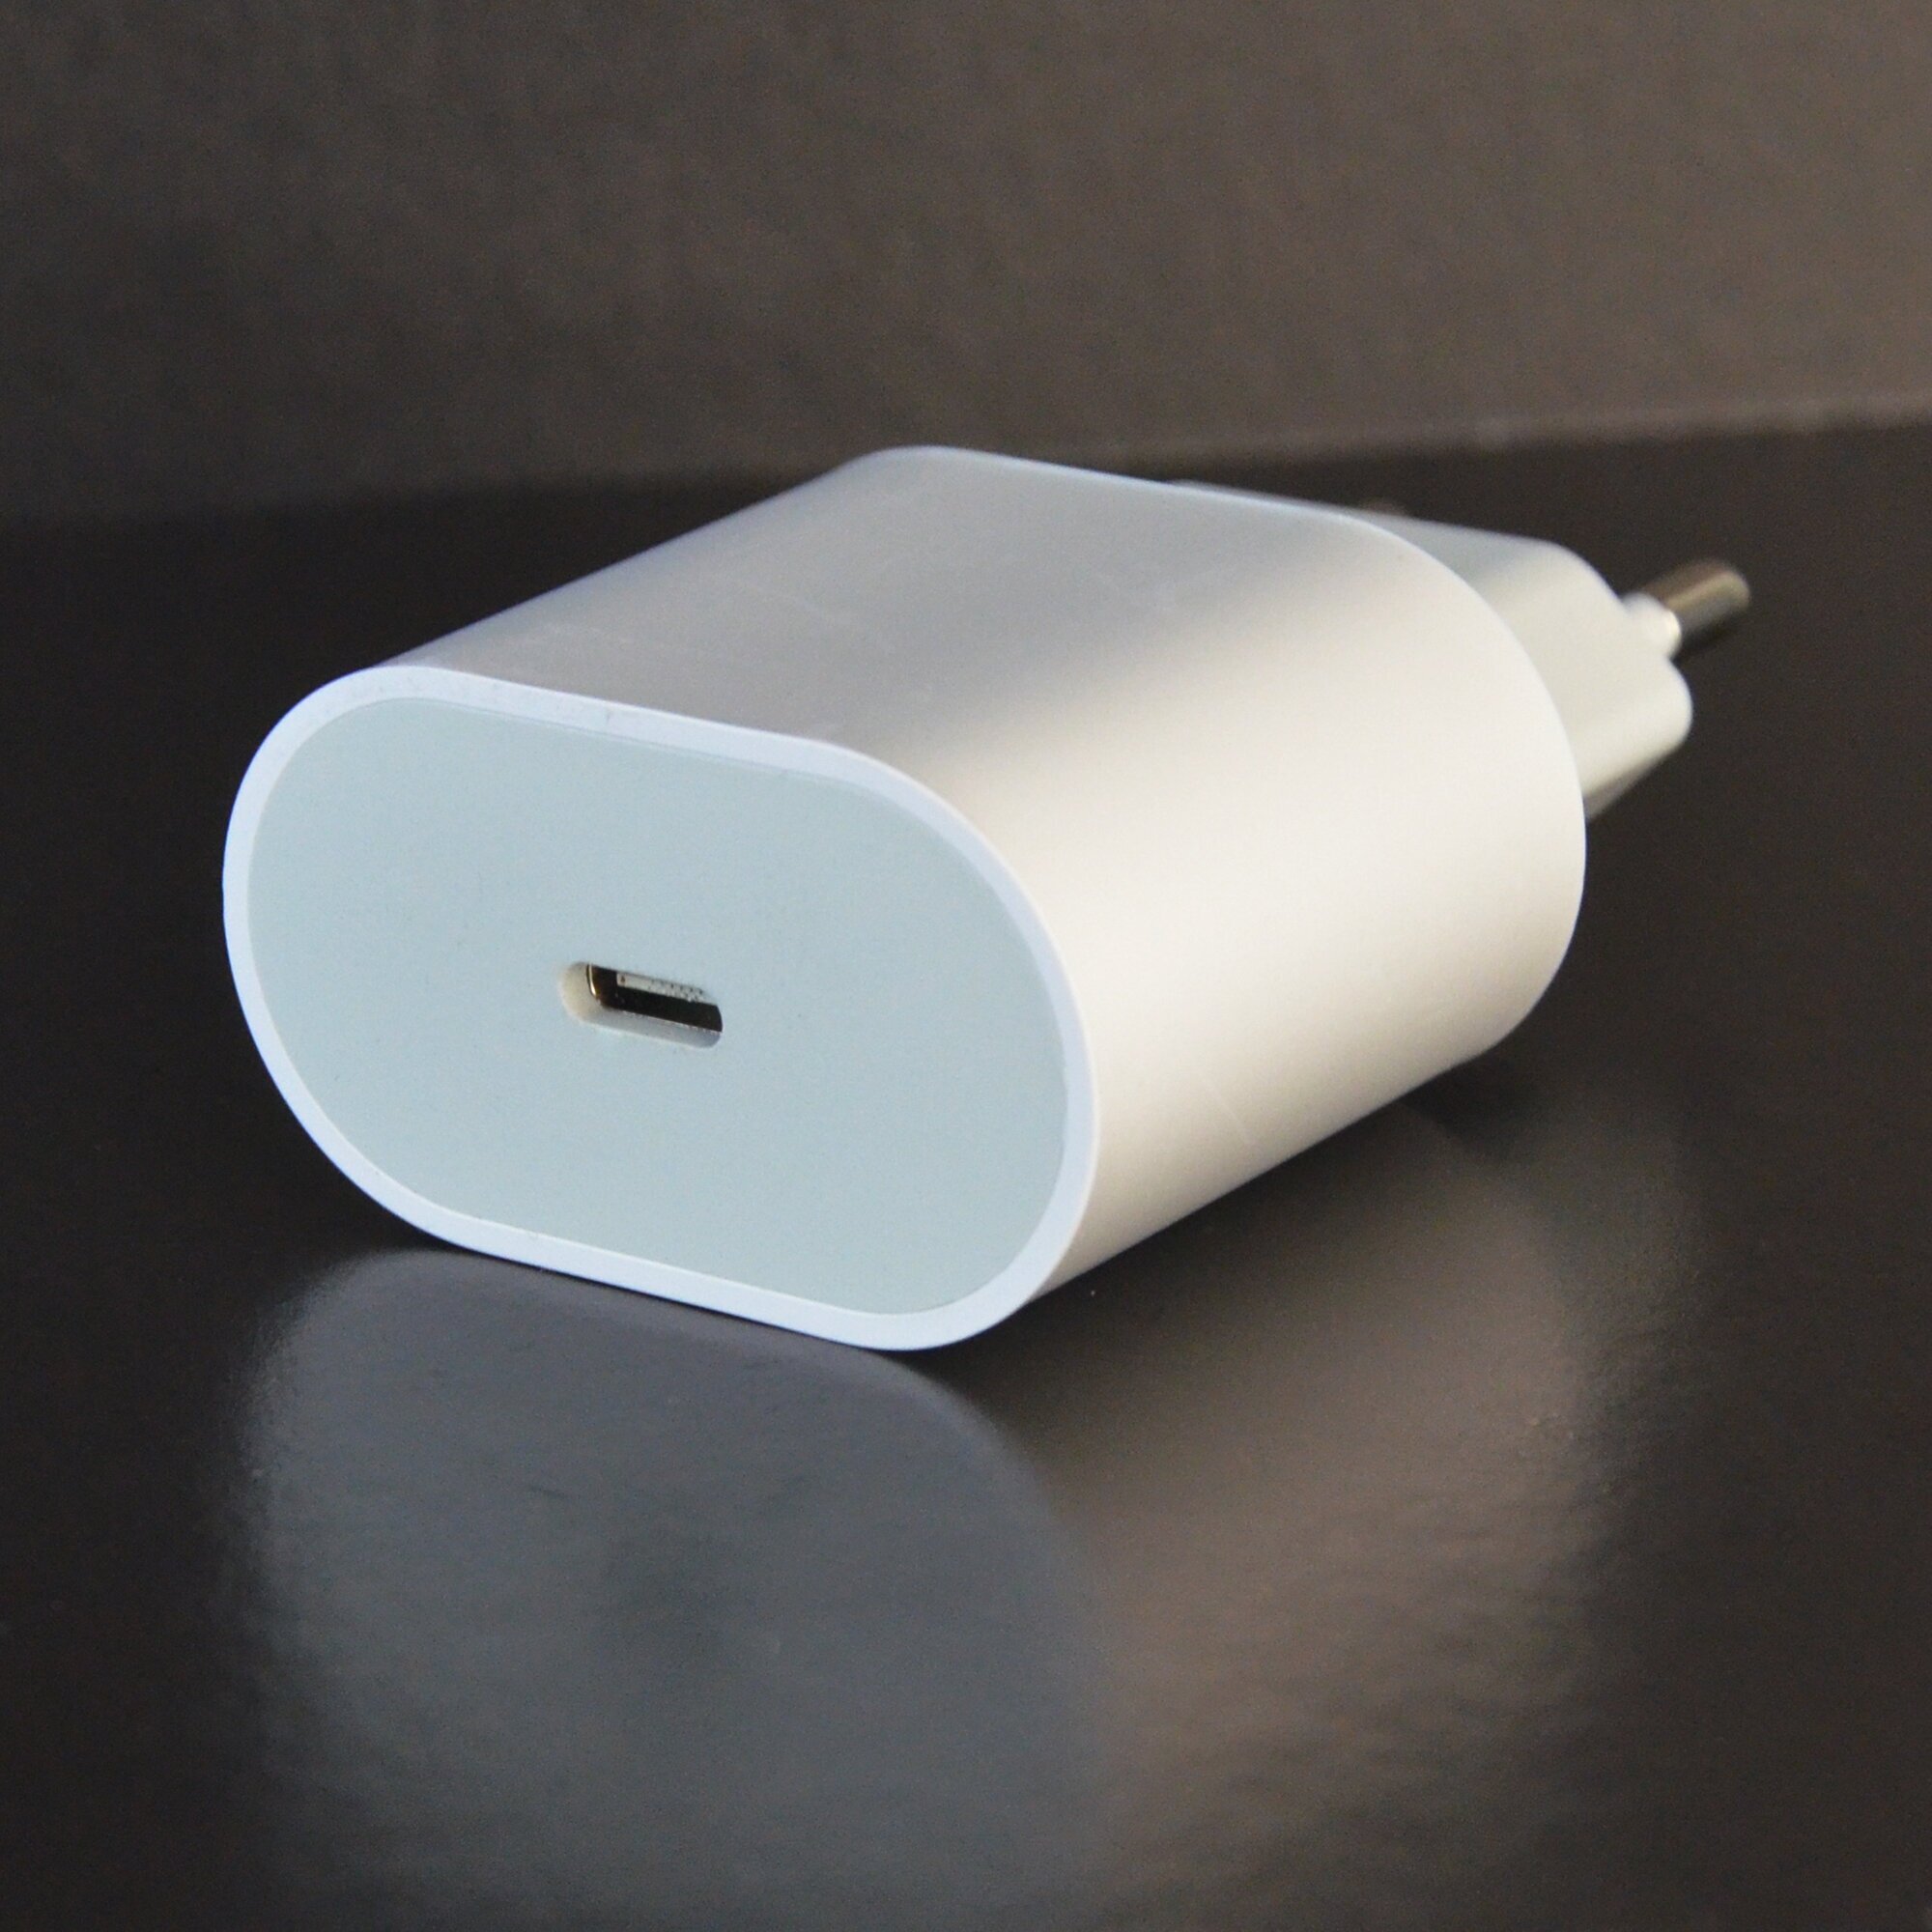 Адаптер 20W для iPhone iPad AirPods USB-C Type C зарядка для телефона белый